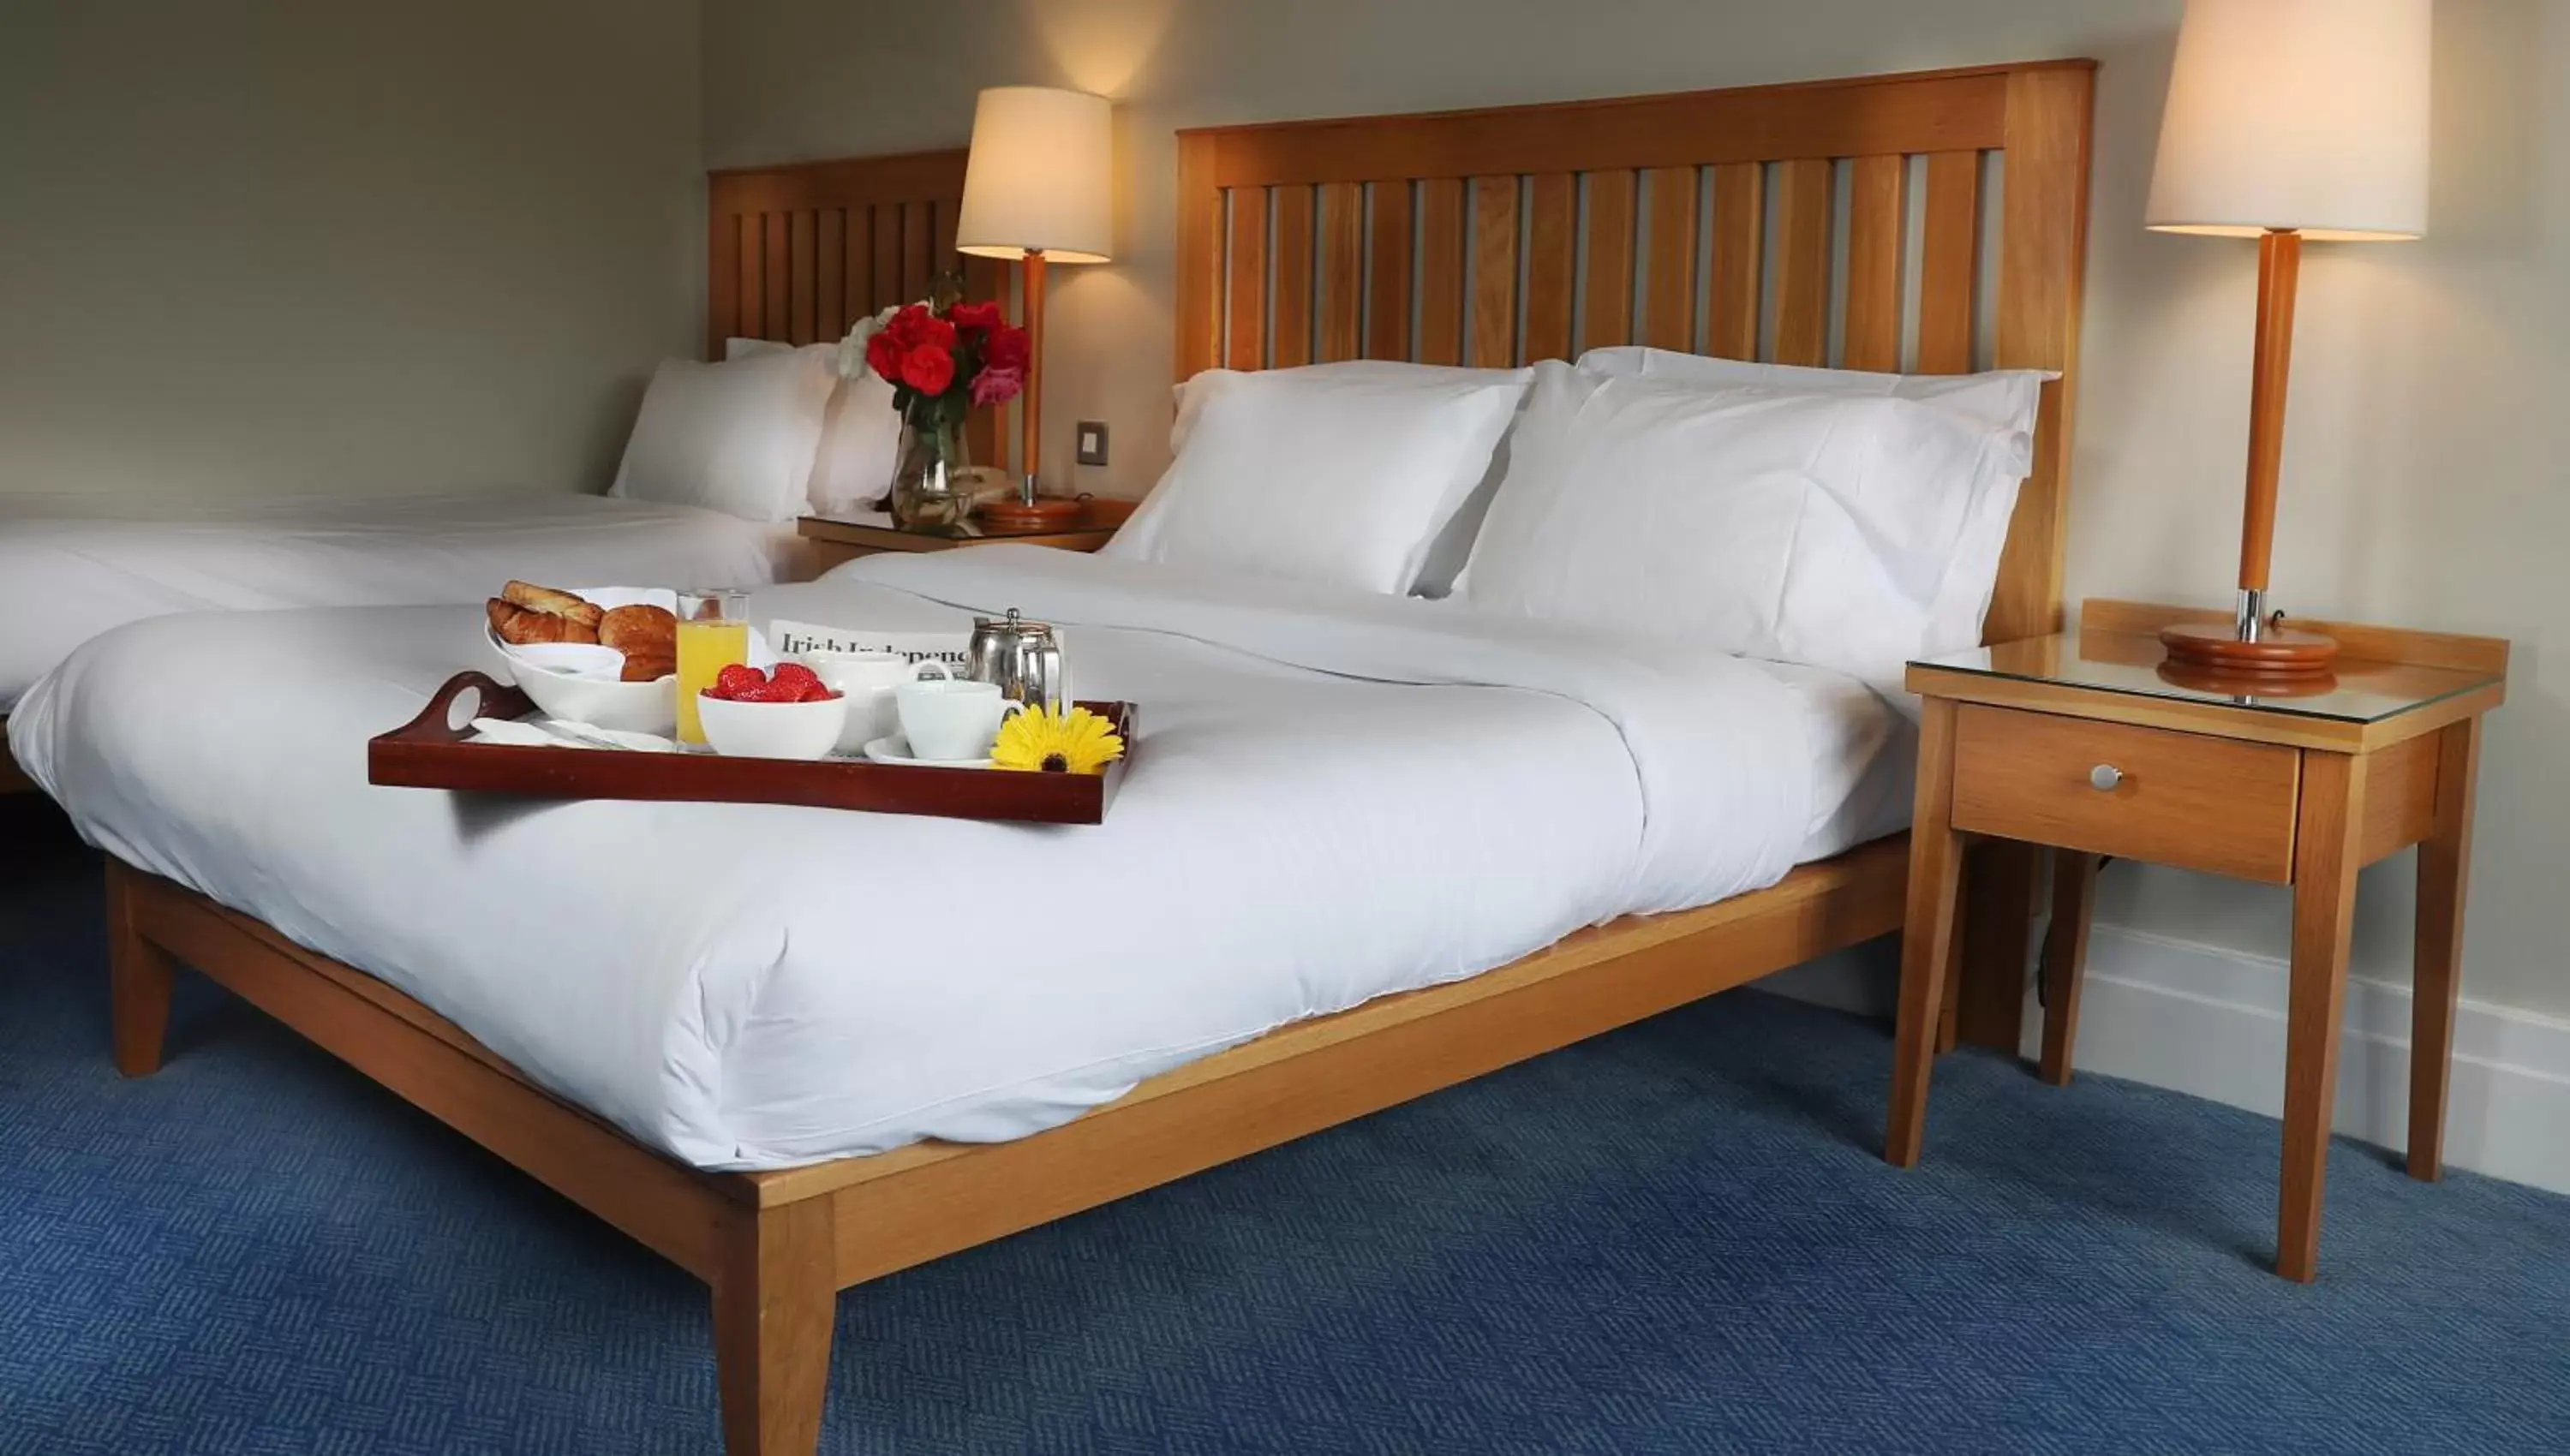 Bedroom, Bed in Ballymascanlon Hotel and Golf Resort